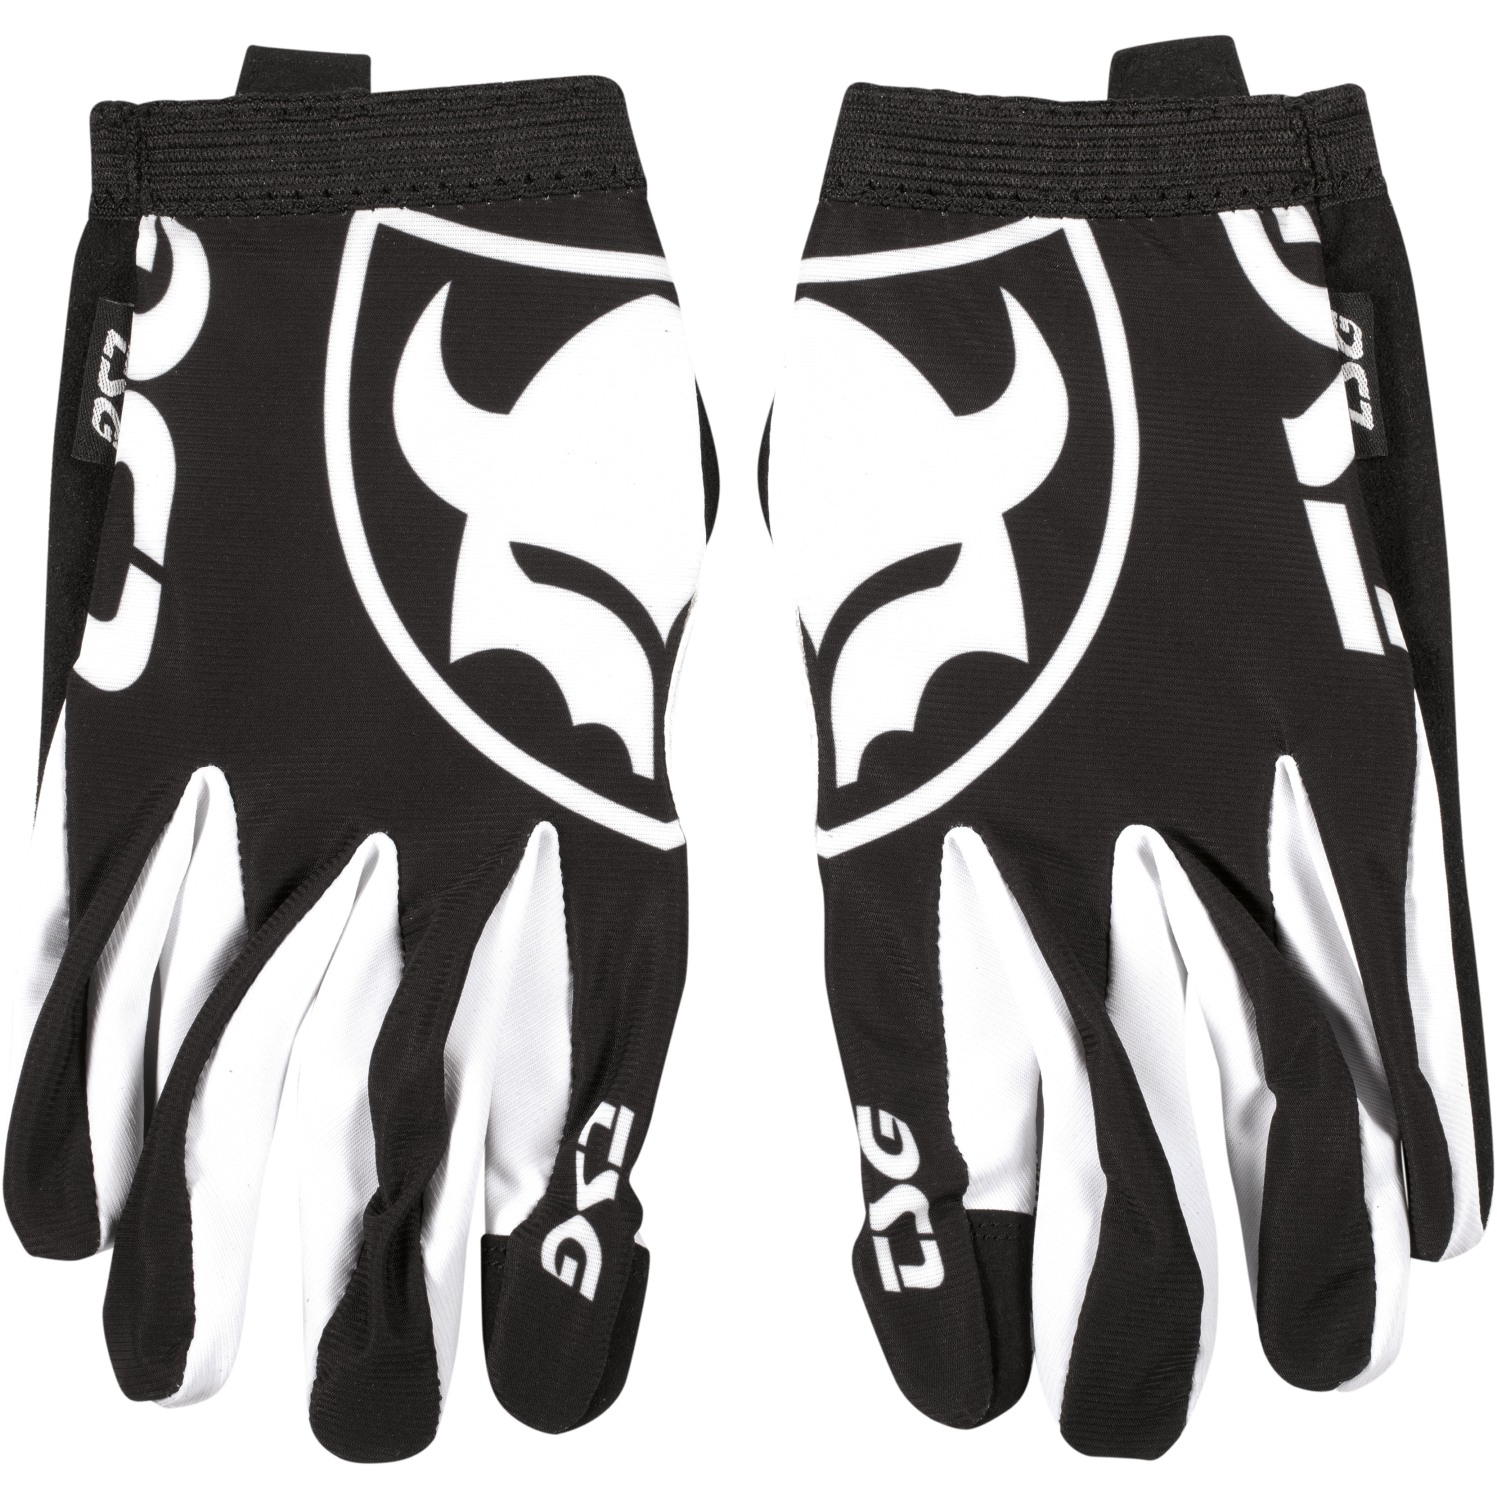 Productfoto van TSG Slim Gloves - black